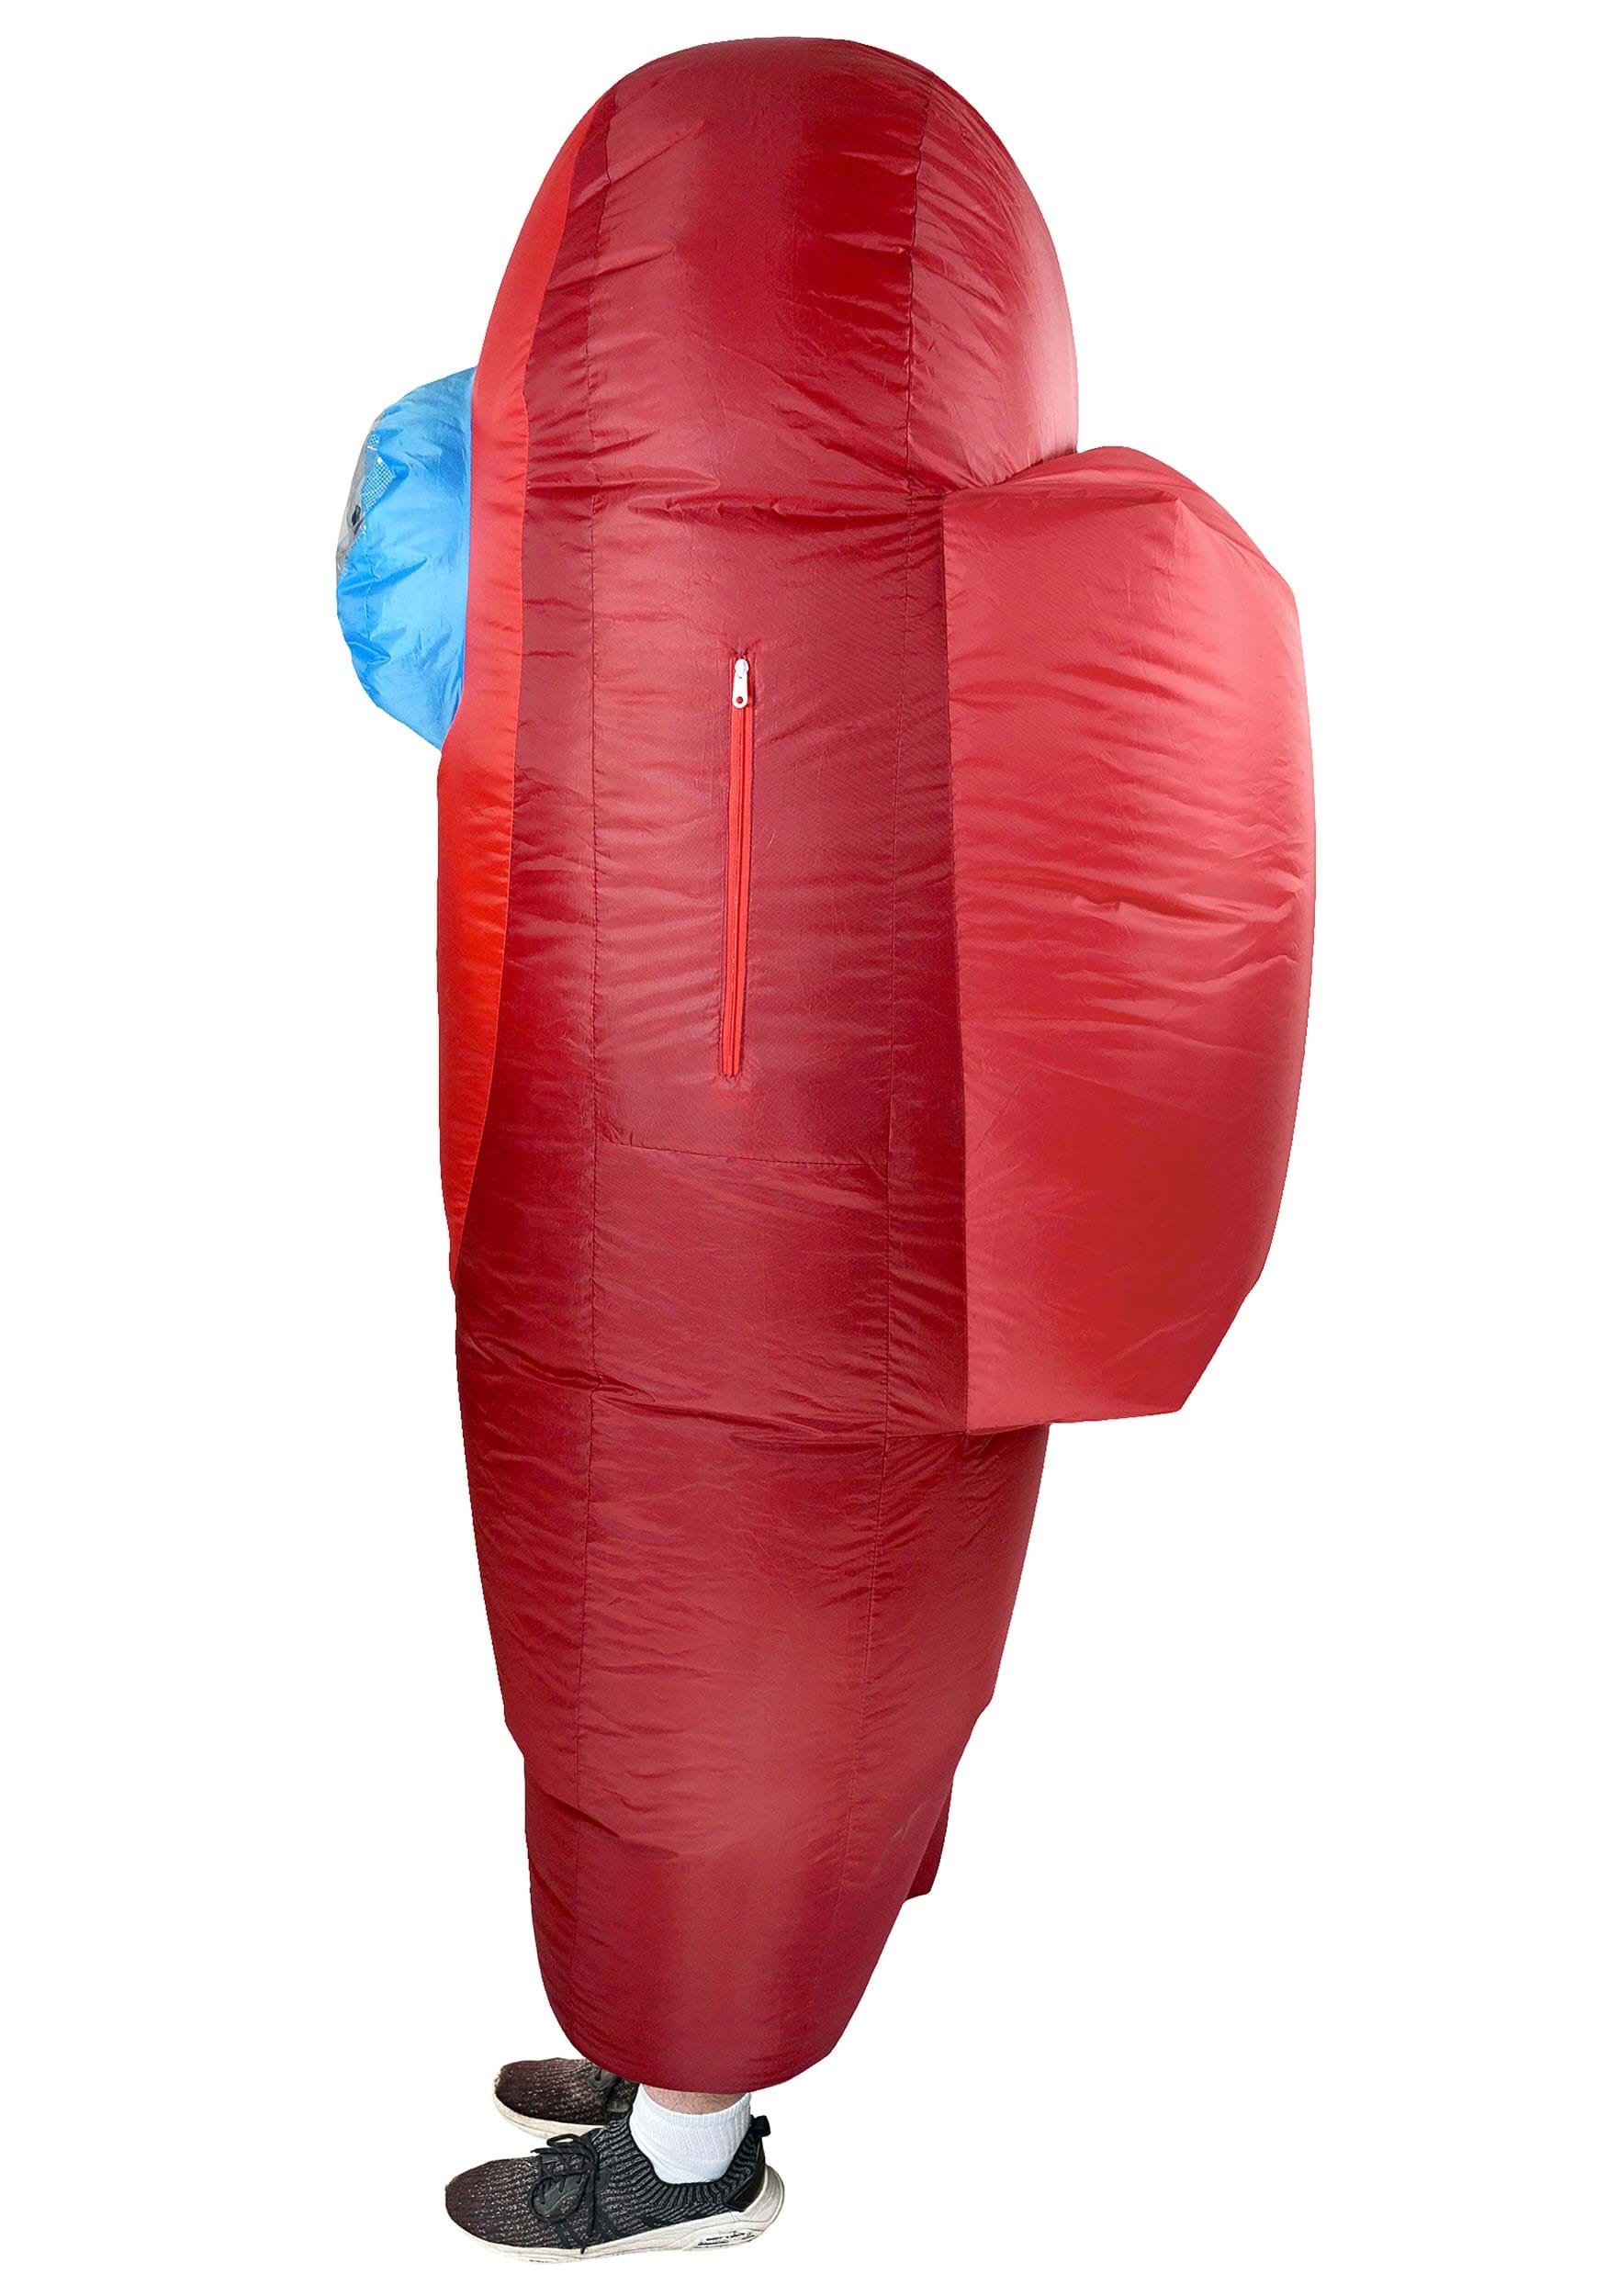 Red Sus Crewmate Killer Costume For Kids